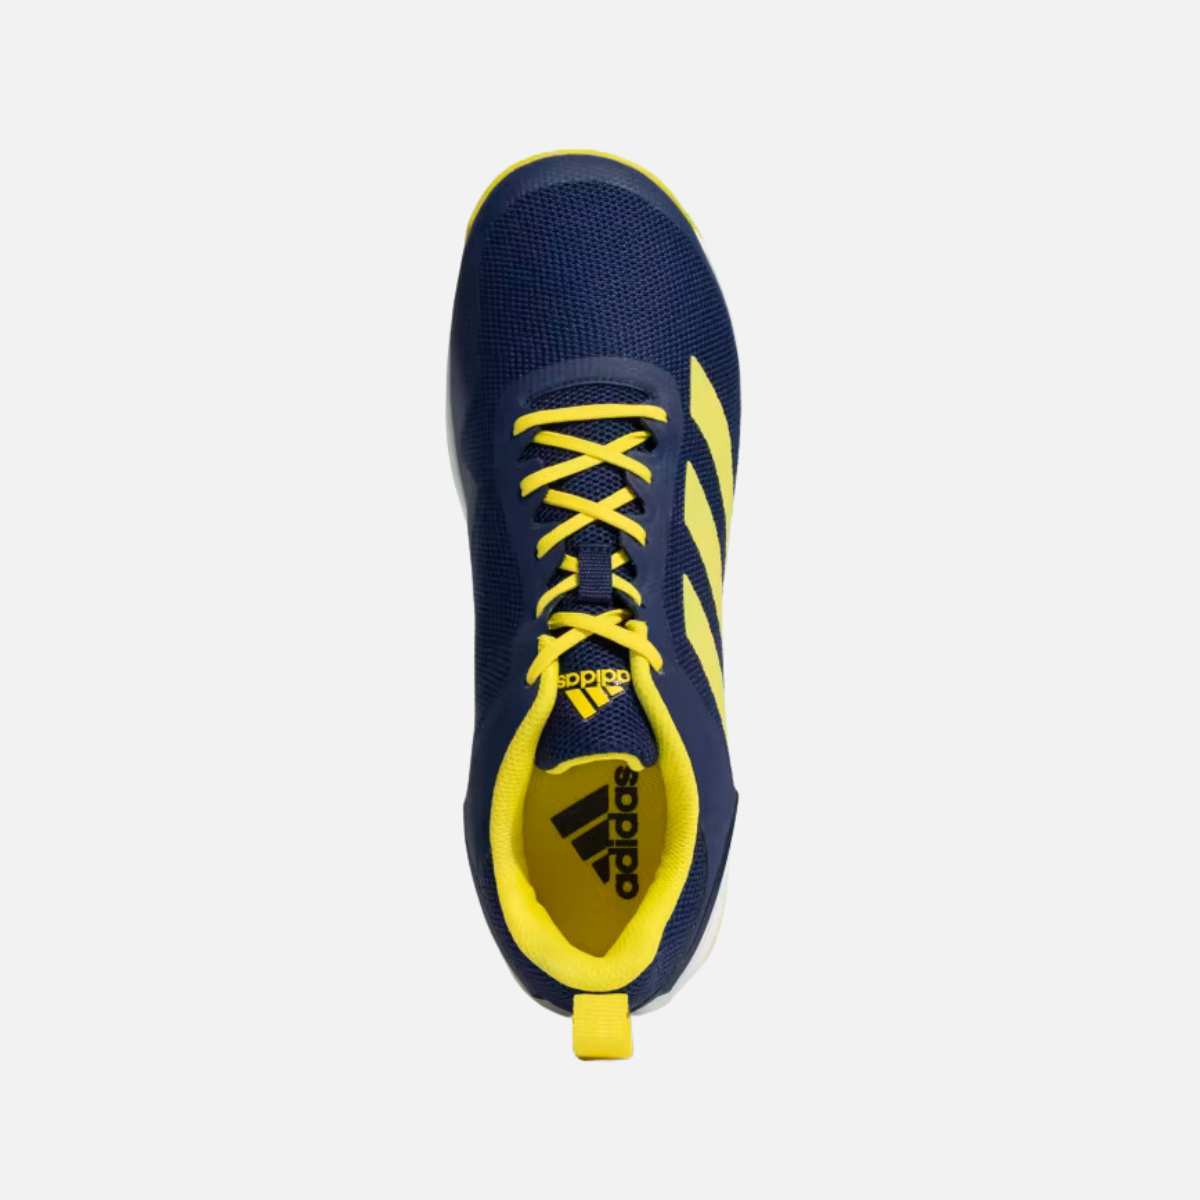 Adidas Tens Top Men's Tennis Shoes -Night Sky/Impact Yellow/Collegiate Navy